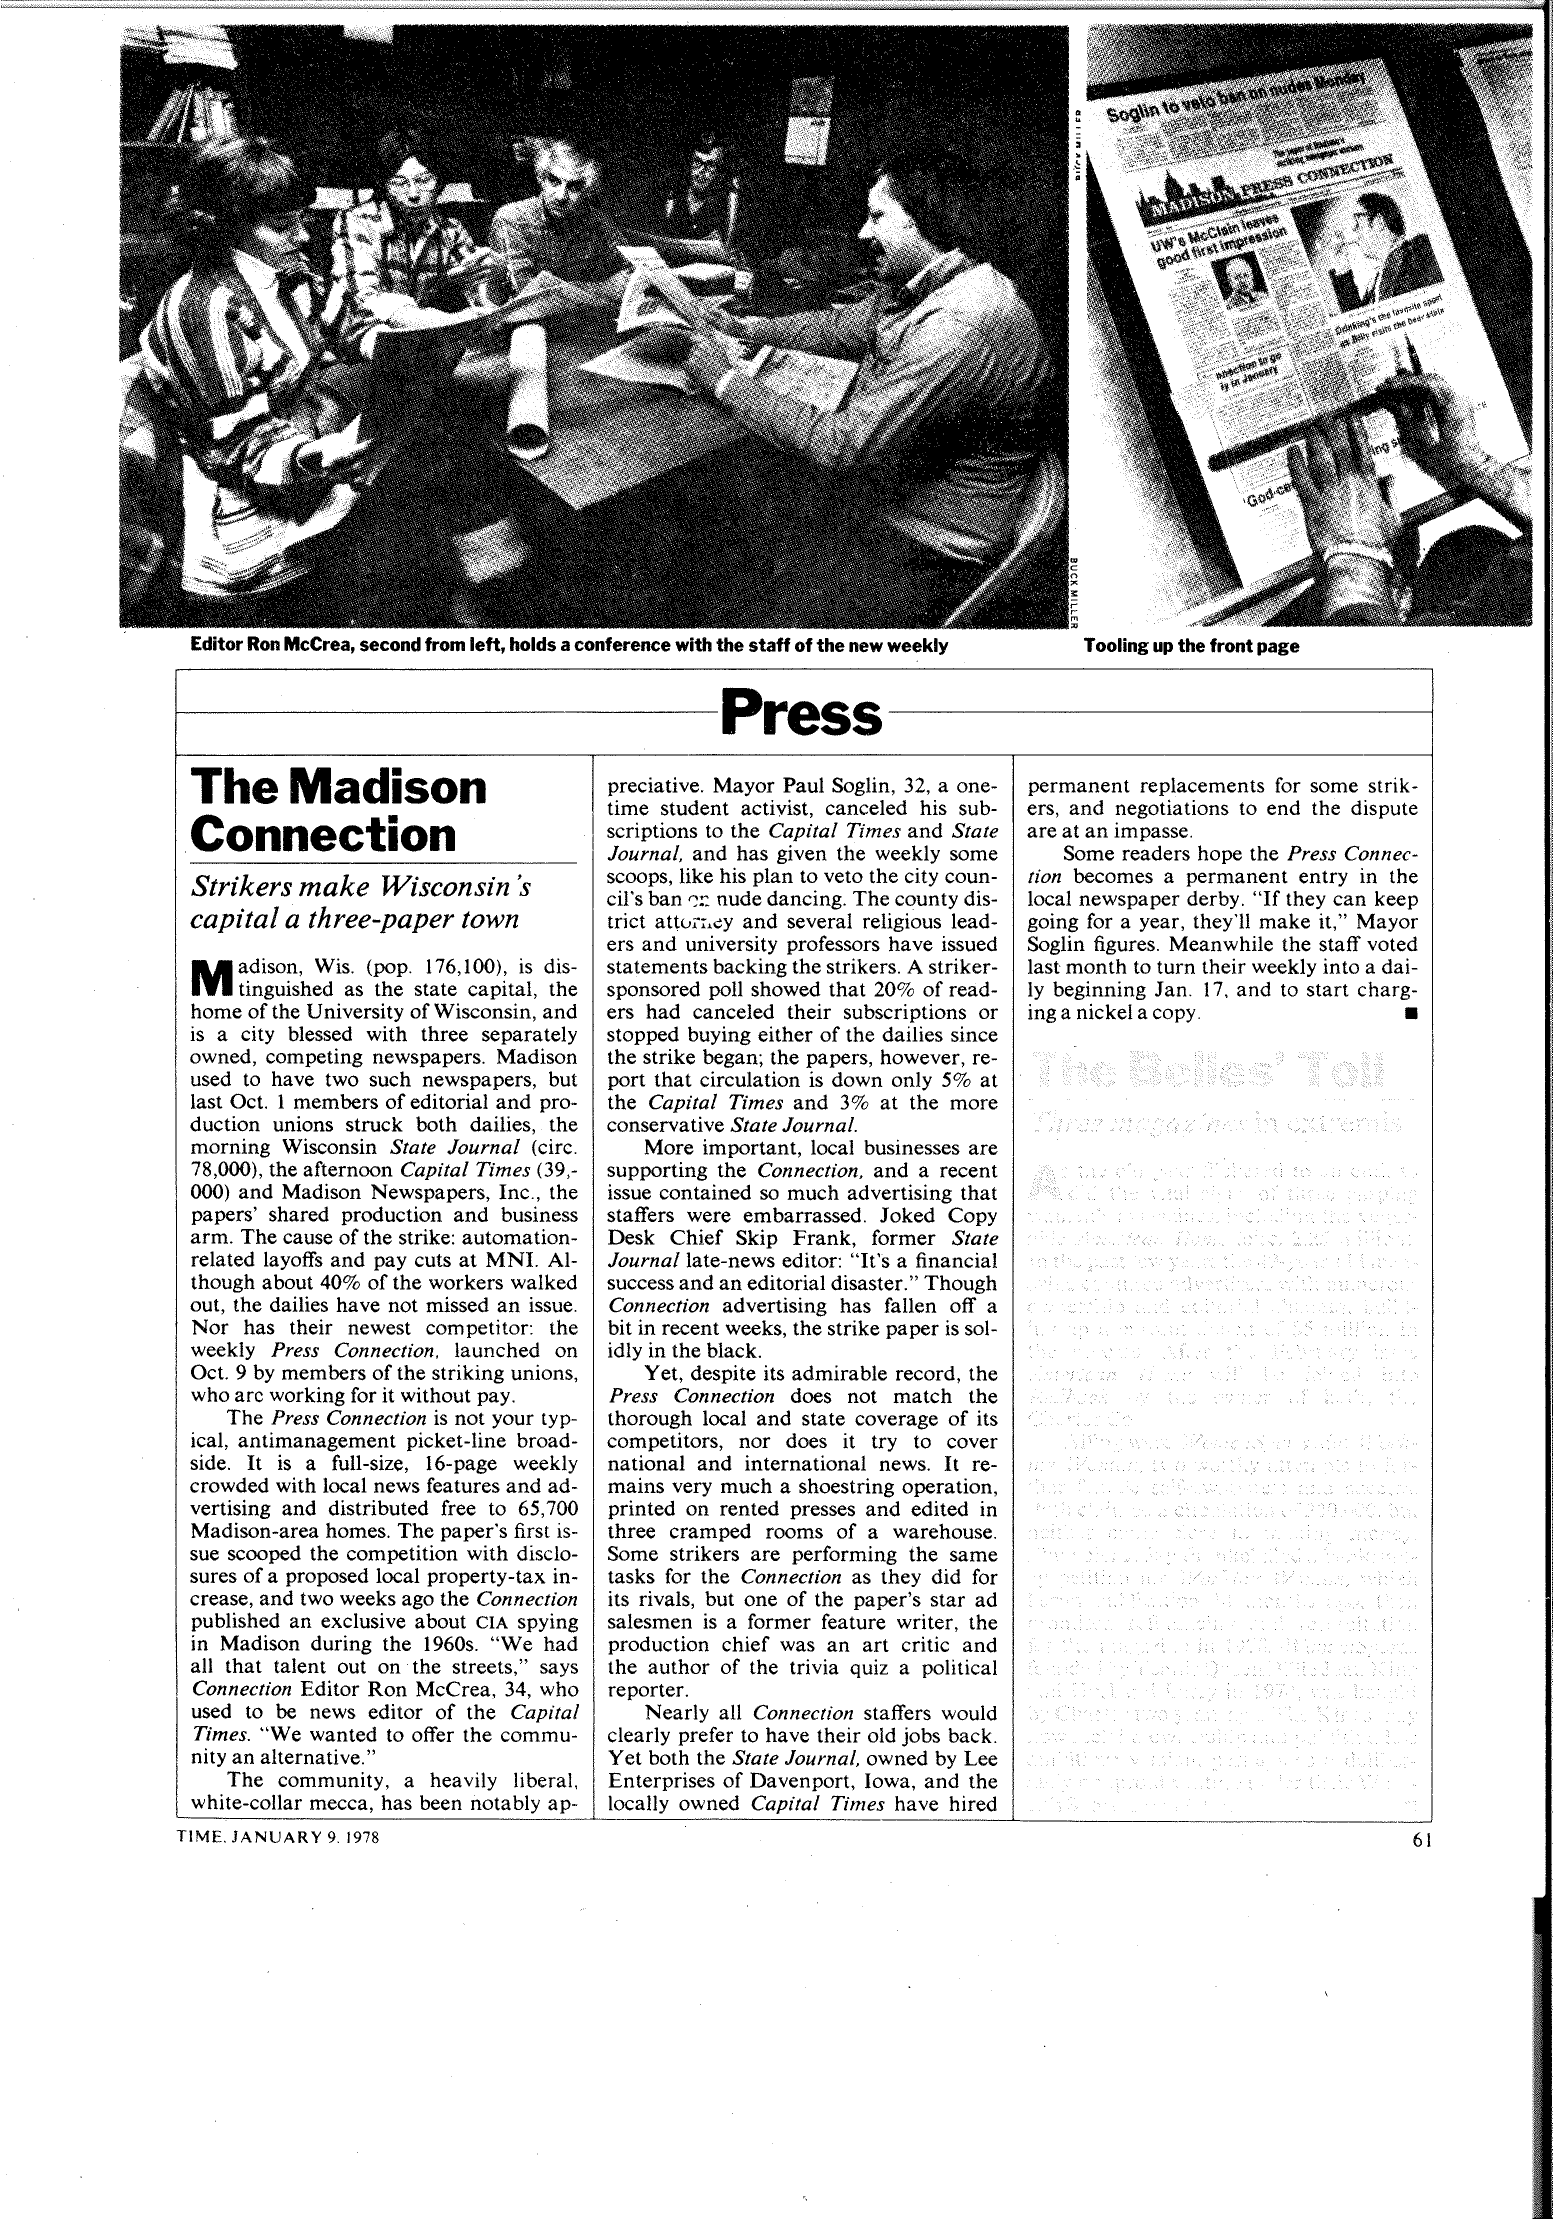 Time Magazine 1-9-78